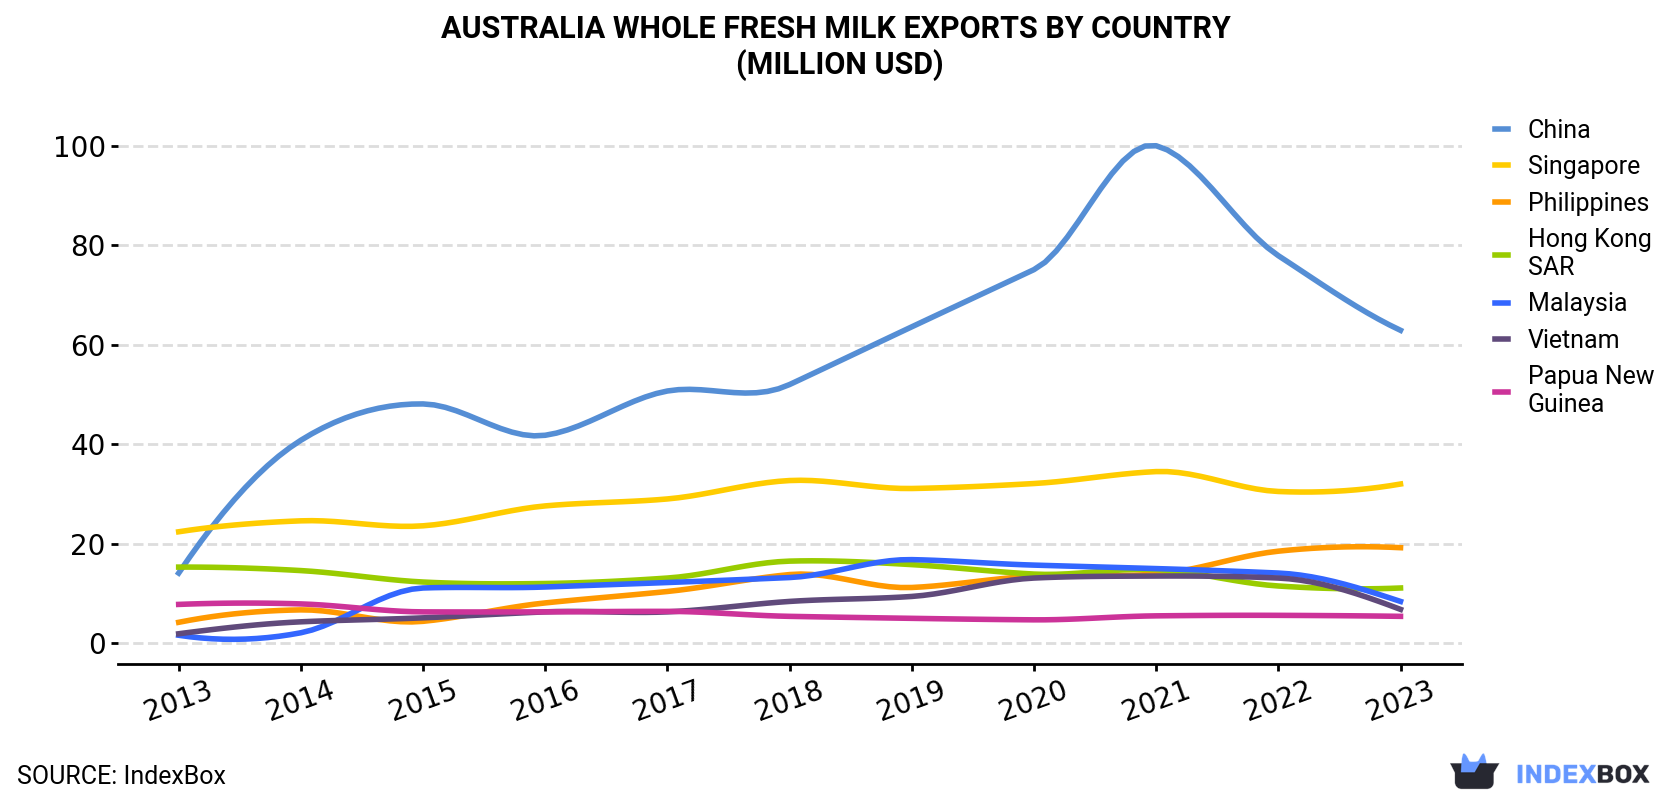 Australia Whole Fresh Milk Exports By Country (Million USD)